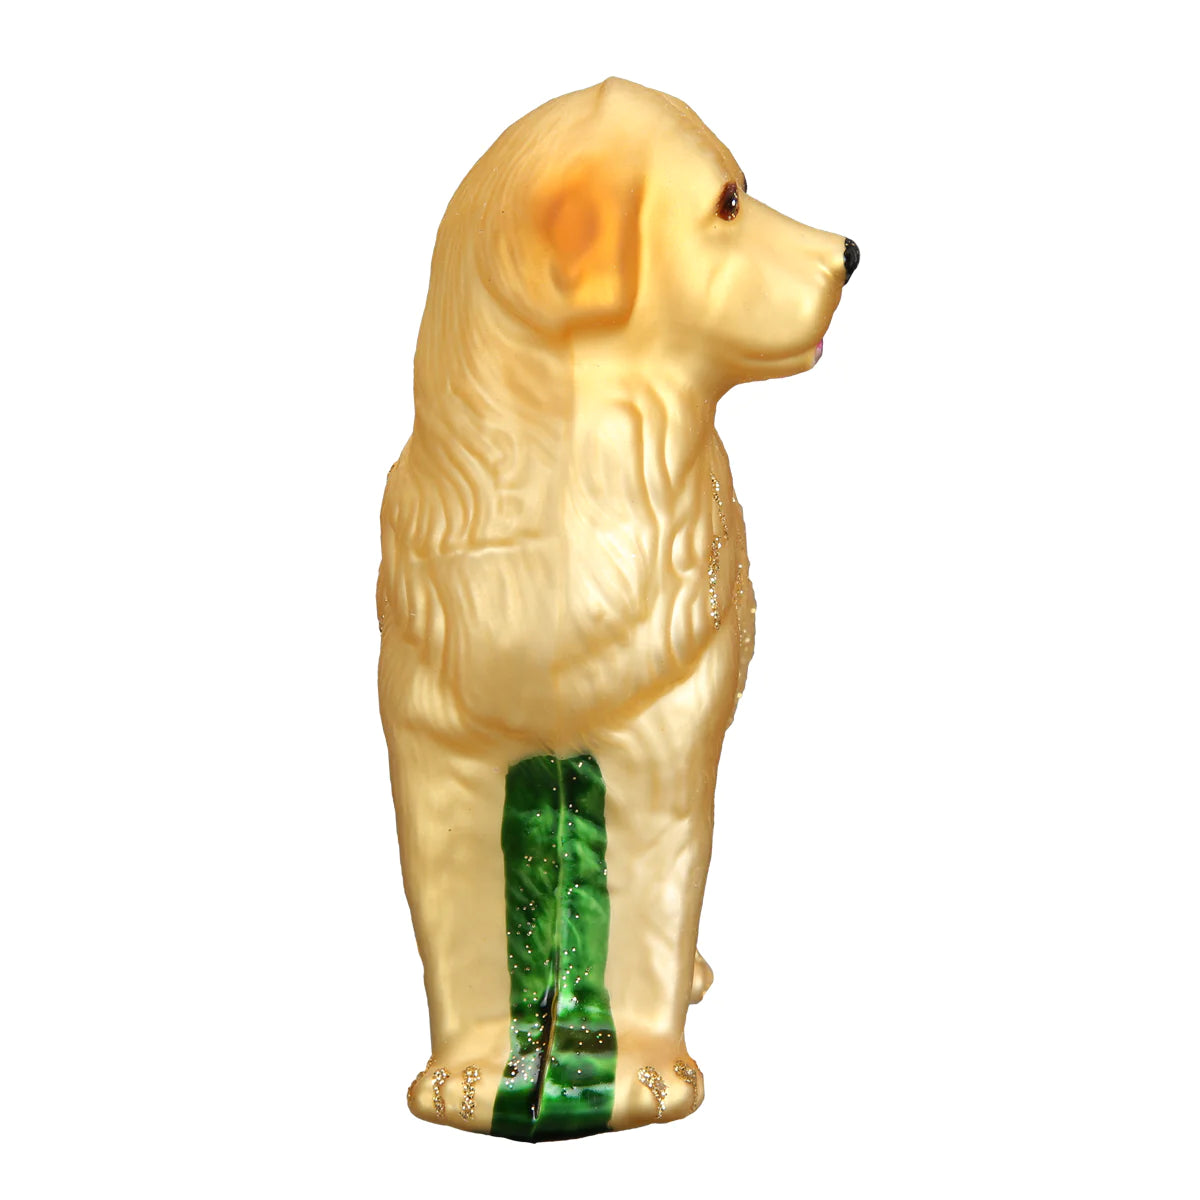 Golden Retriever Tea Bag Holder Golden Retriever Gifts Dog Lovers